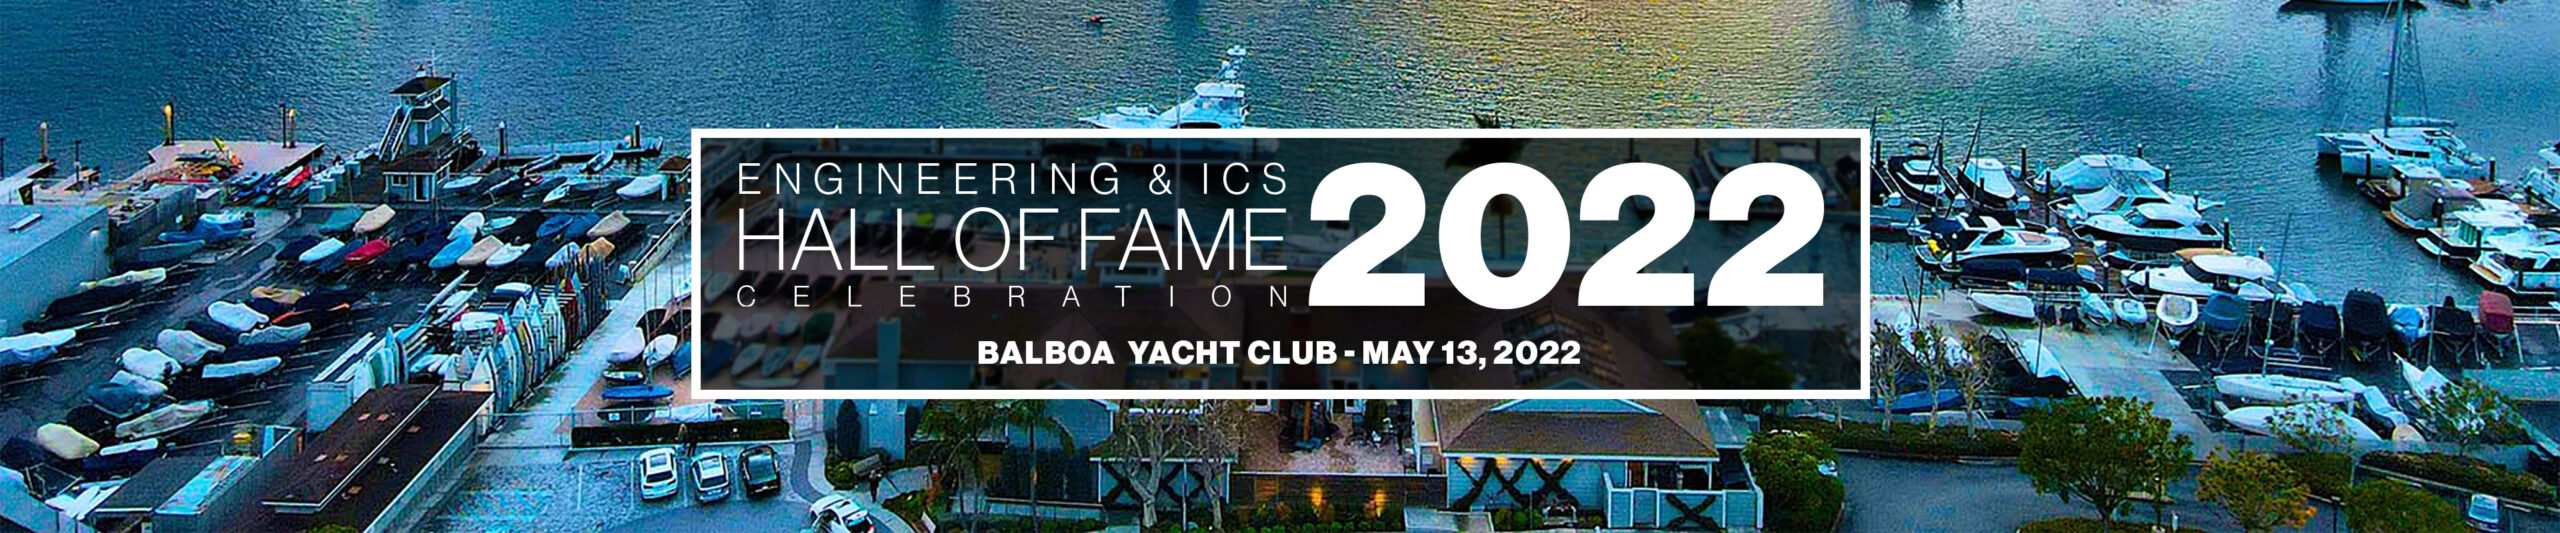 Engineering and ICS Hall of Fame - 2022: Balboa Yacht Club - May 13. 2022